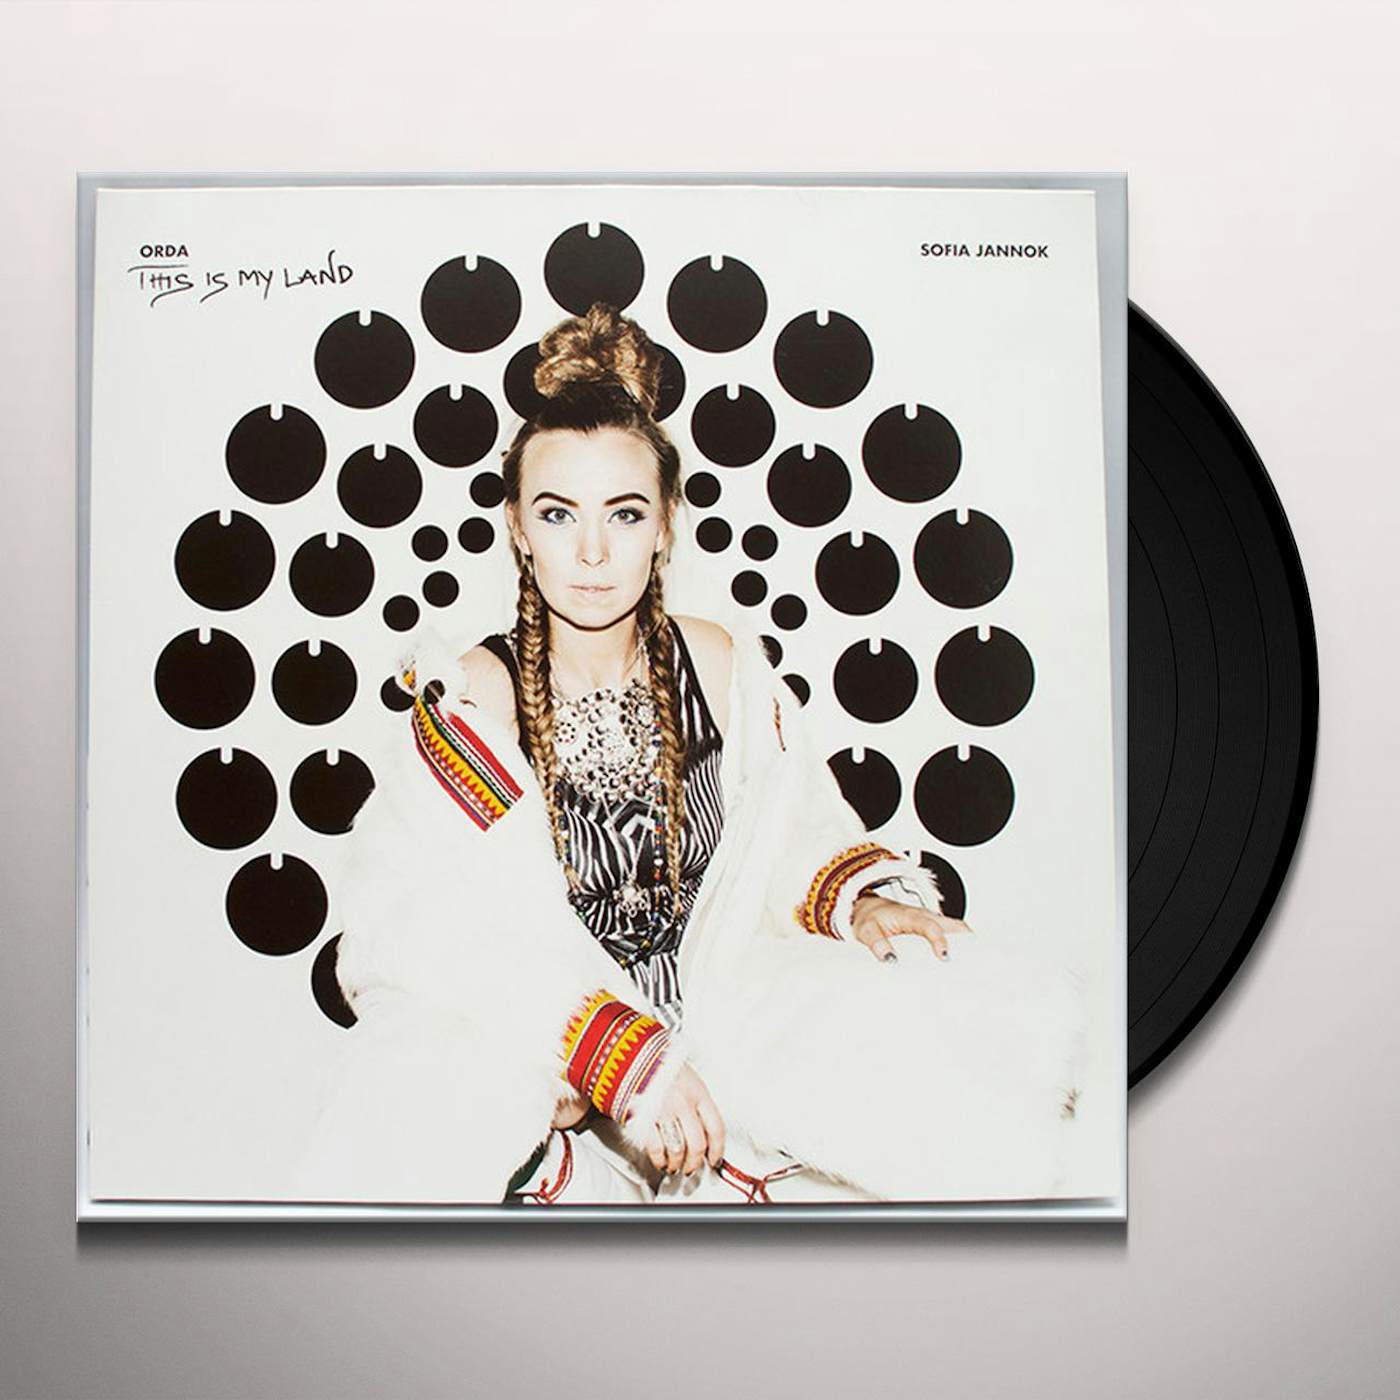 SOFIA JANNOK Vinyl Record